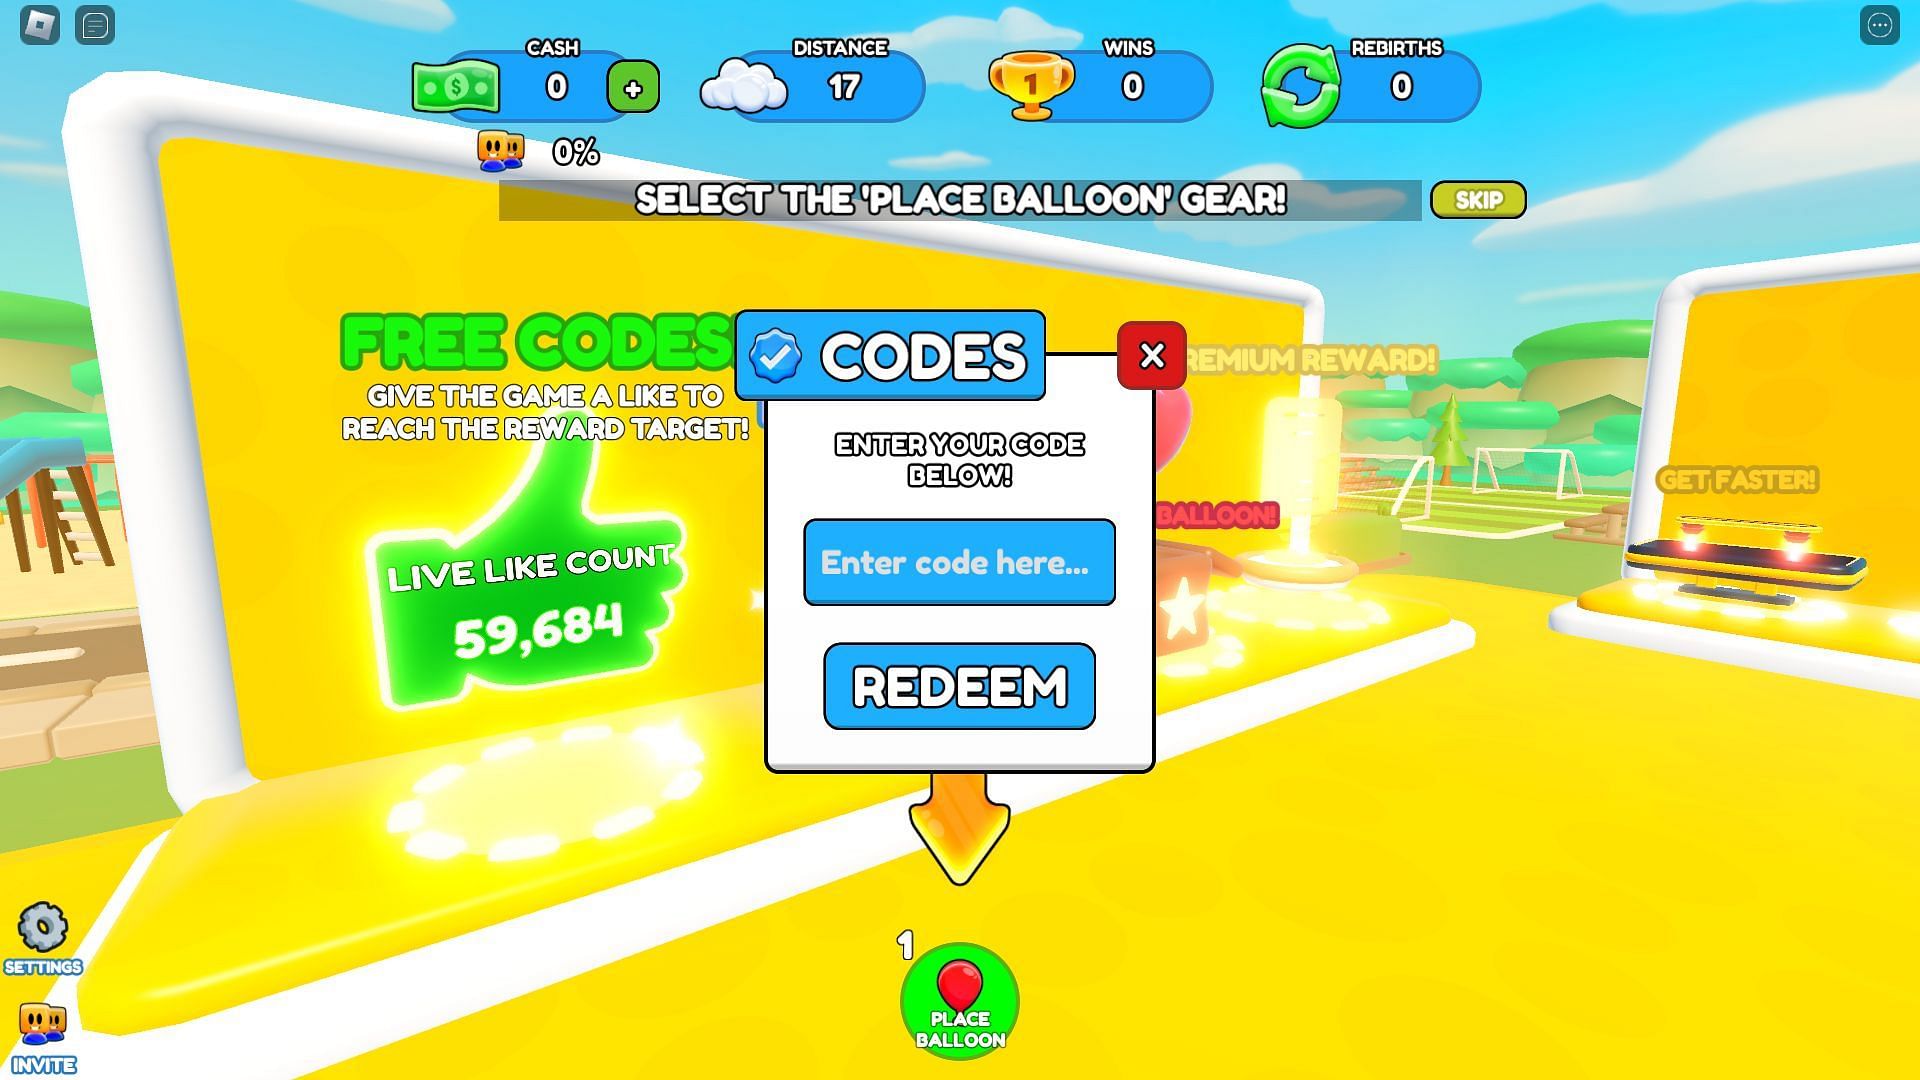 Active codes for Balloon Simulator (Image via Roblox)